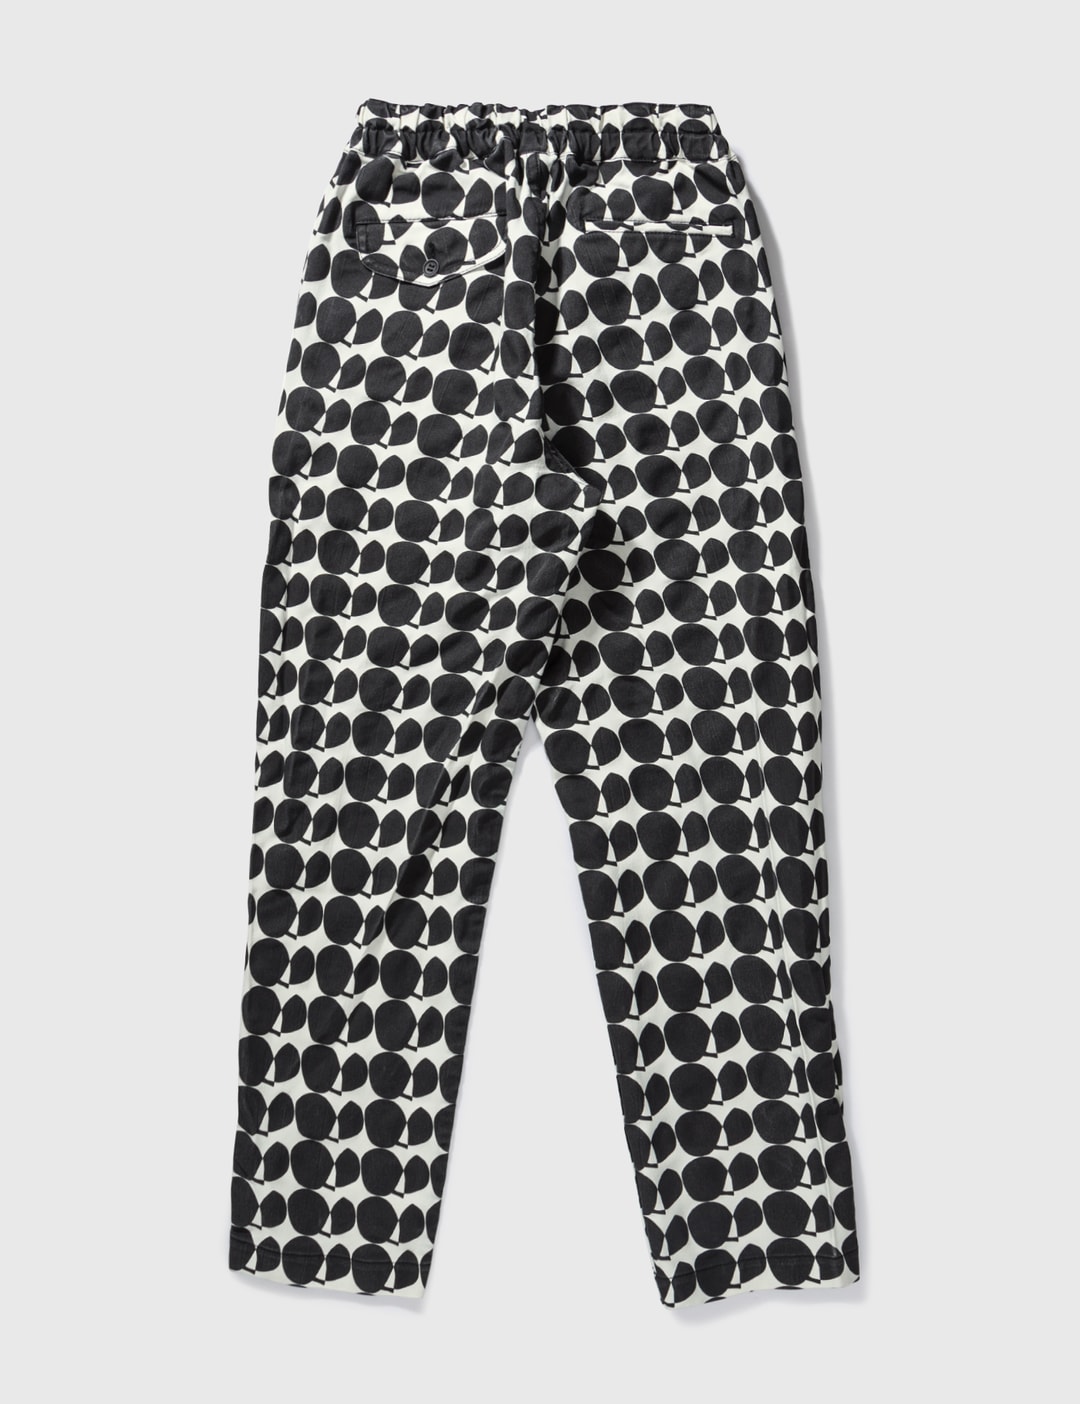 Comme des Garçons - Cdg Black Dot Pant | HBX - Globally Curated Fashion ...